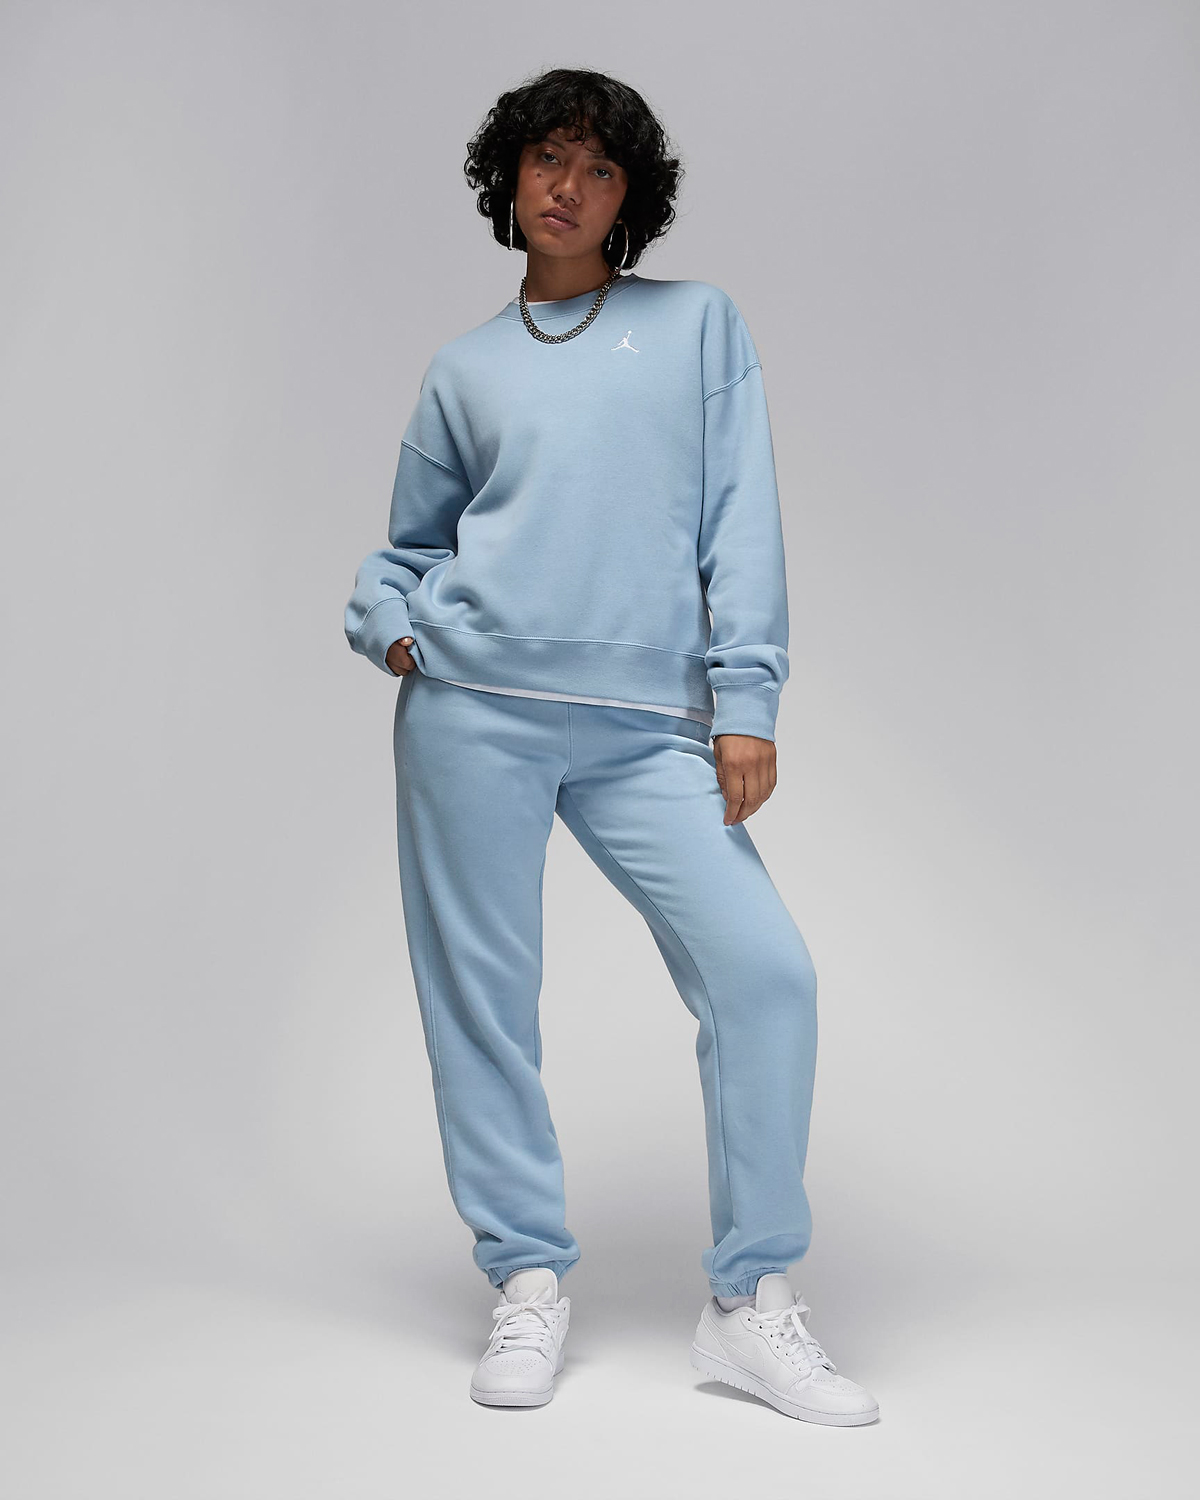 Jordan-Brooklyn-Womens-Sweatshirt-Pants-Blue-Grey